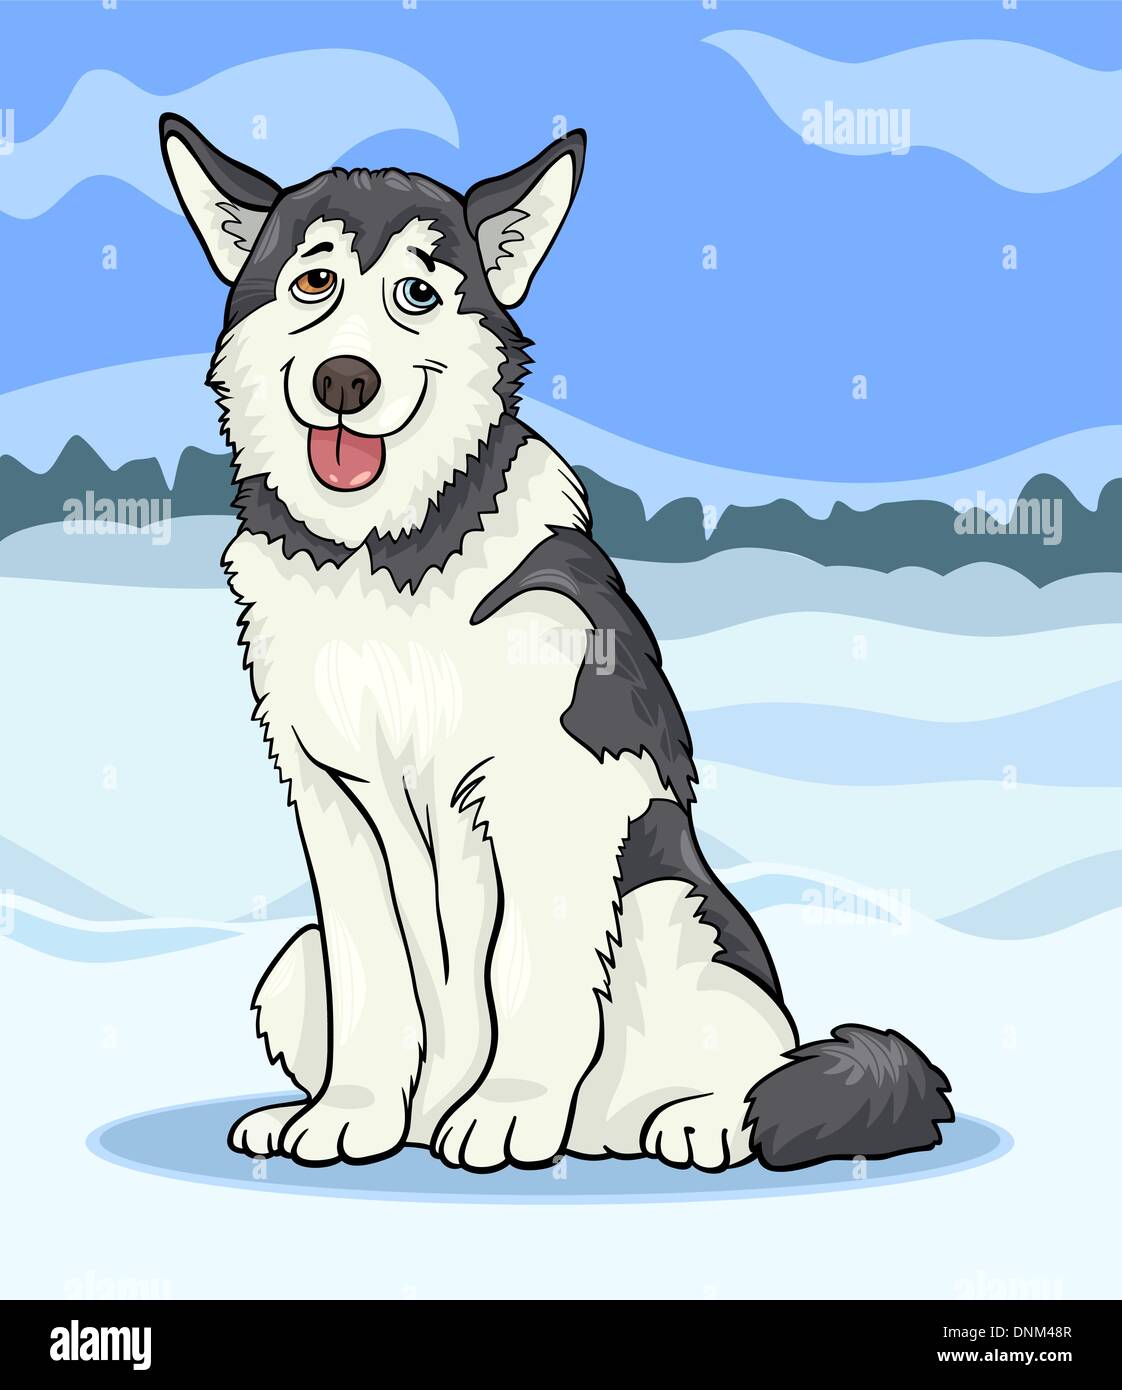 Cartoon Illustration of Funny Siberian Husky or Alaskan Malamute Dog  against Blue Sky and Winter Rural Scene Stock Vector Image & Art - Alamy